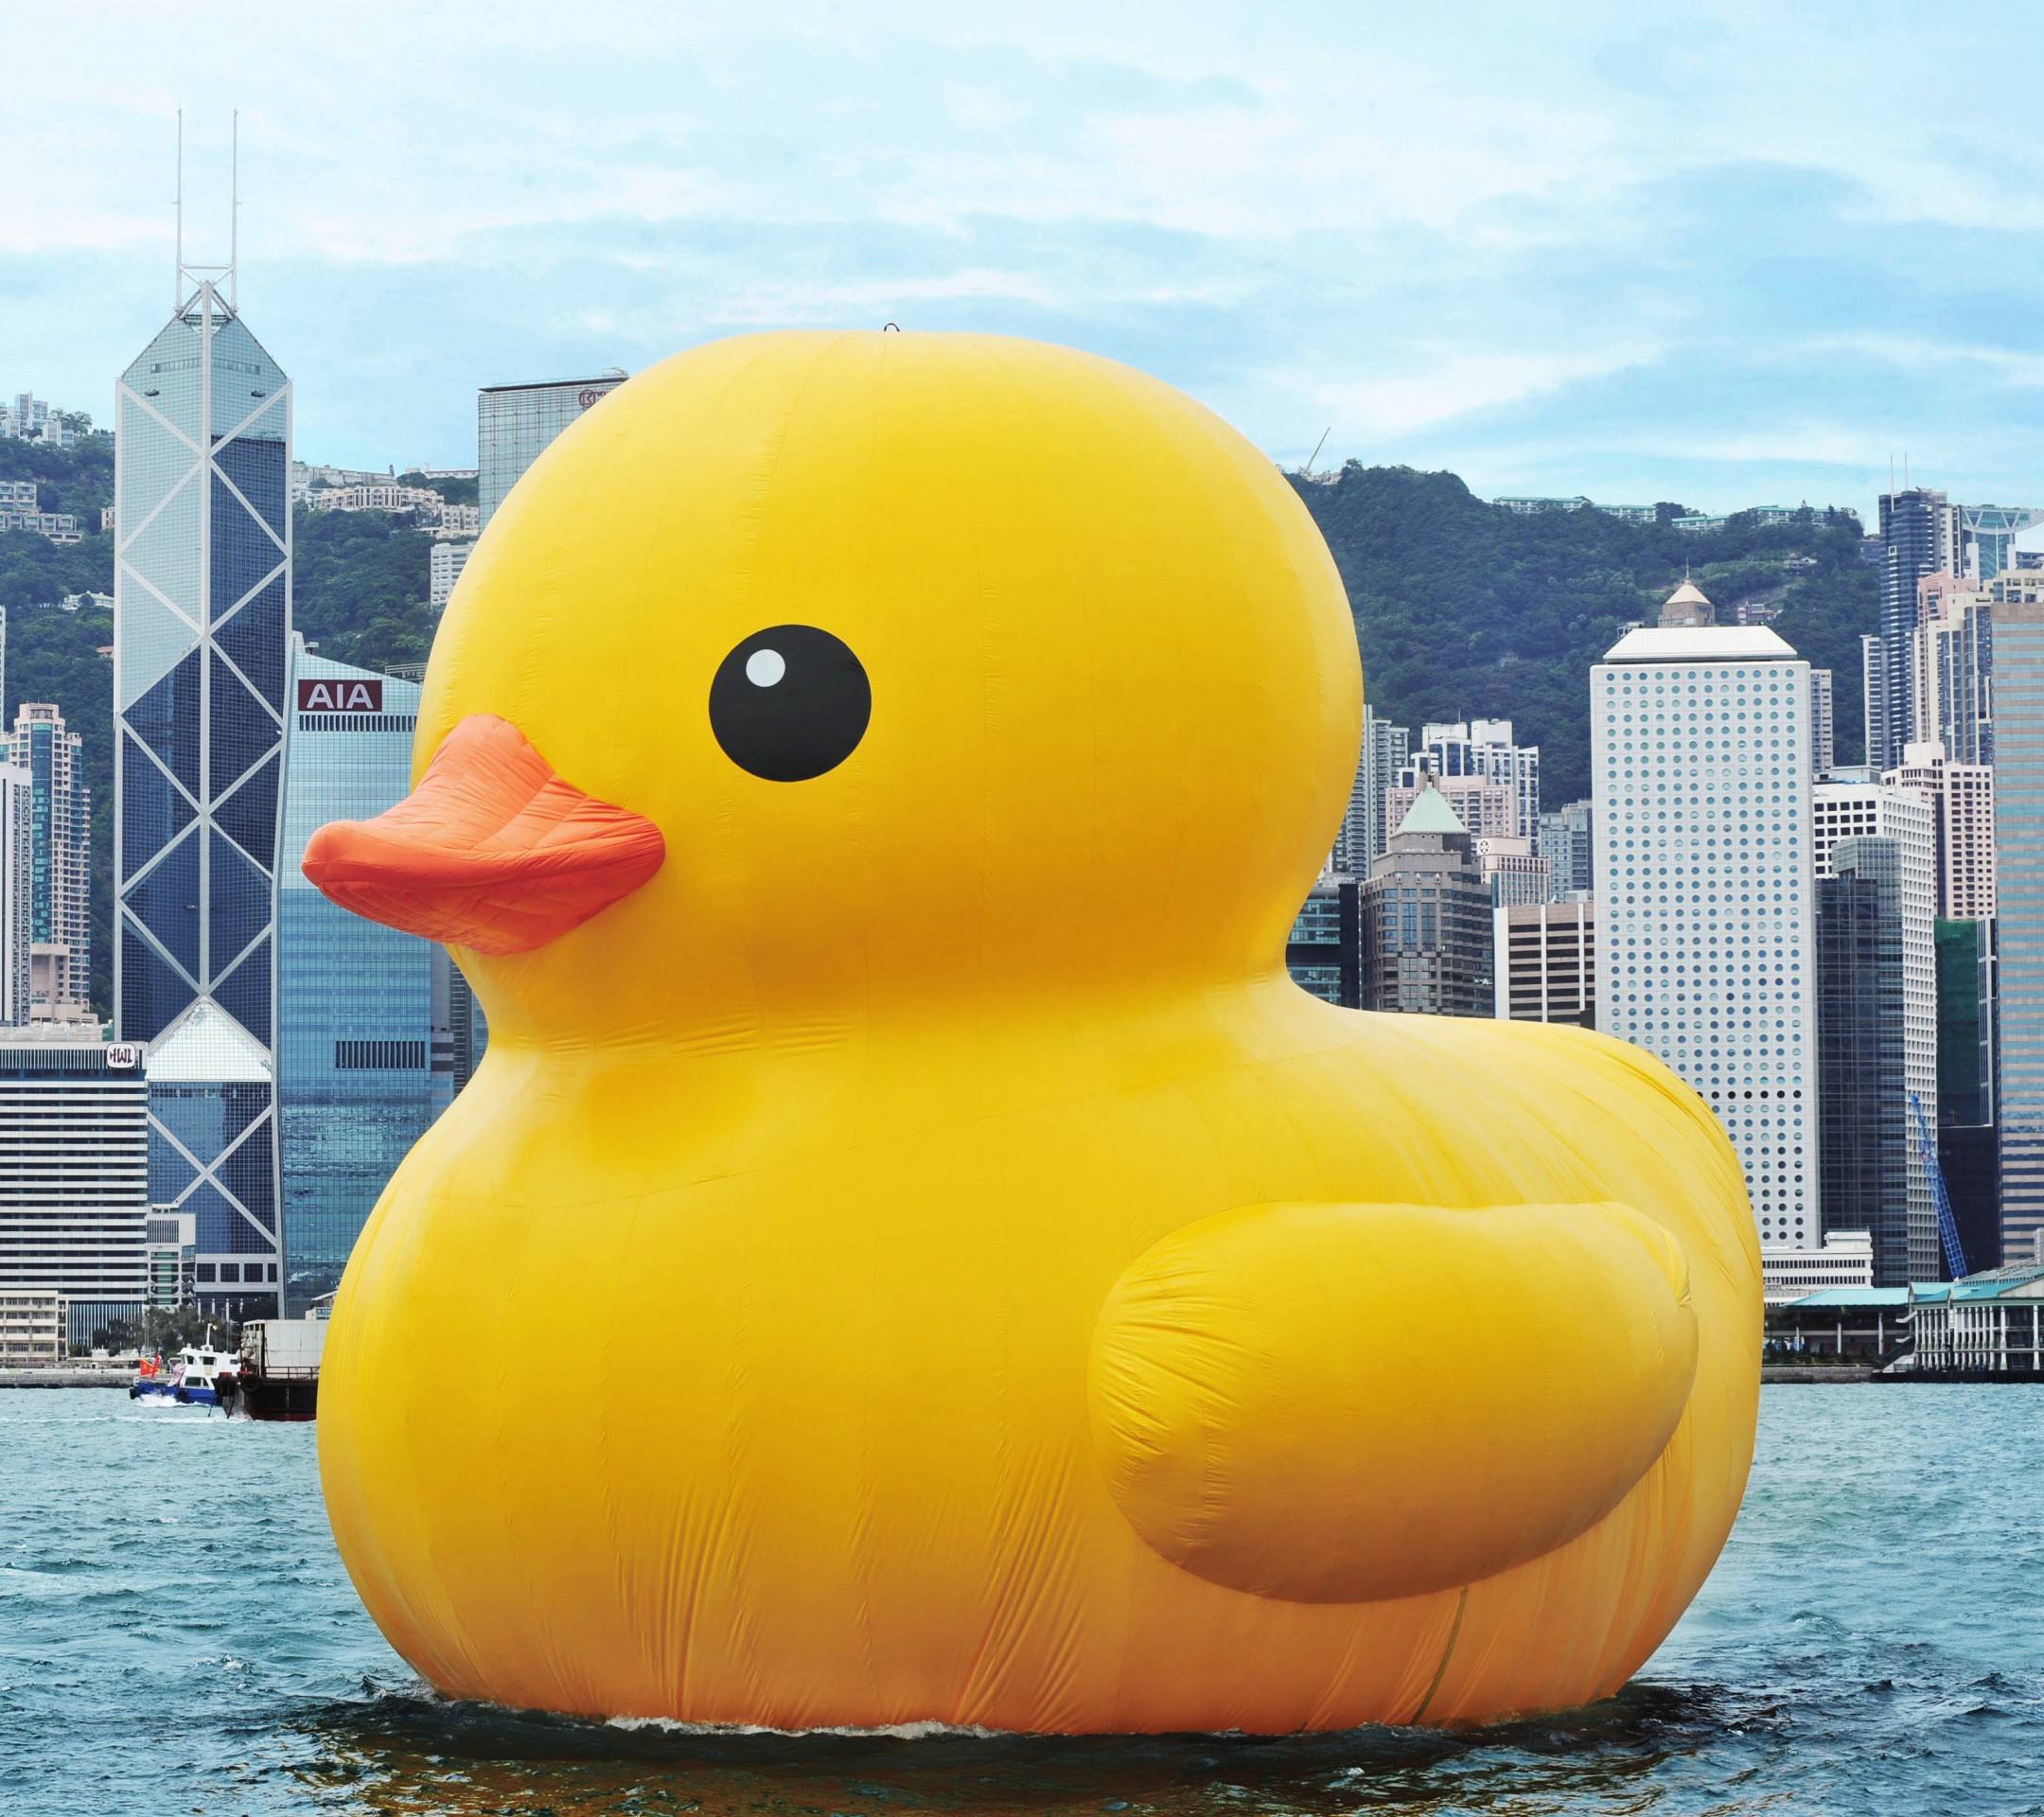 Big Yellow Duck logs on to Aptos: a digital turnaround for a cultural symbol